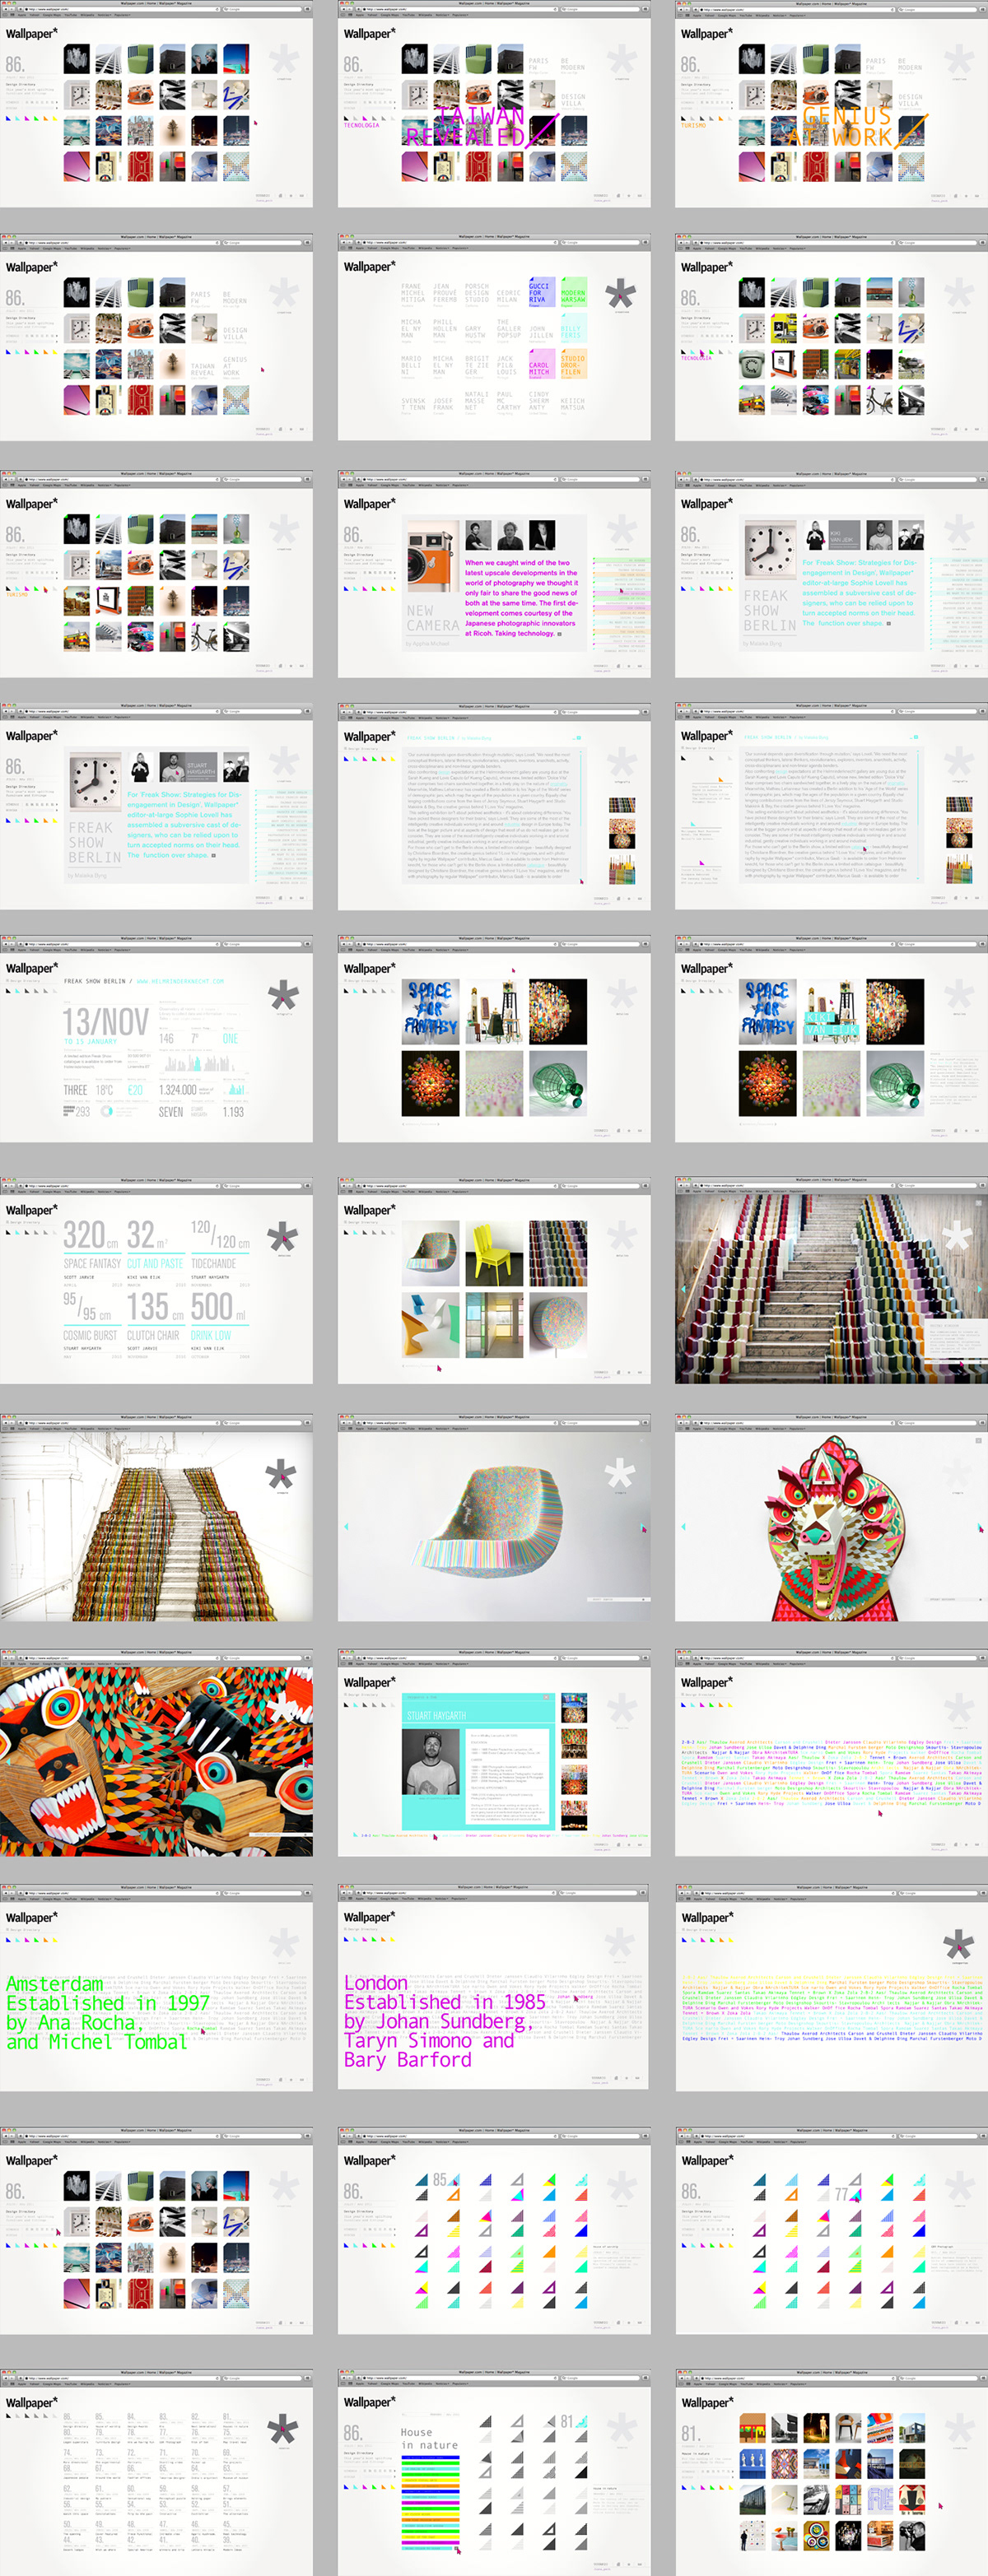 wallpaper Web